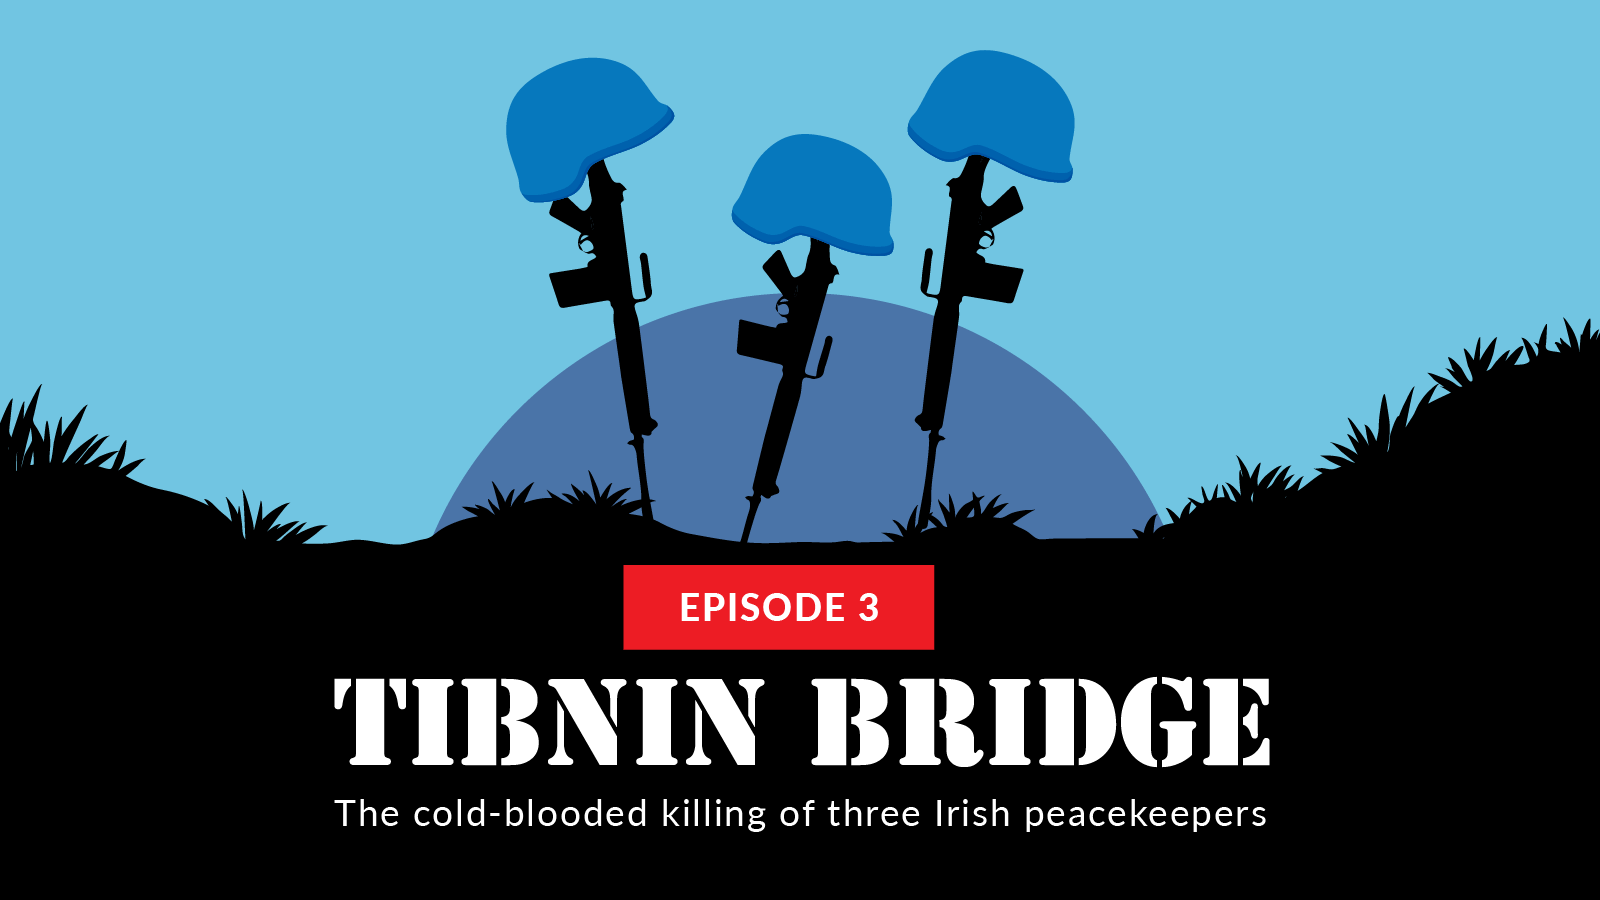 A dark chapter in Irish military history